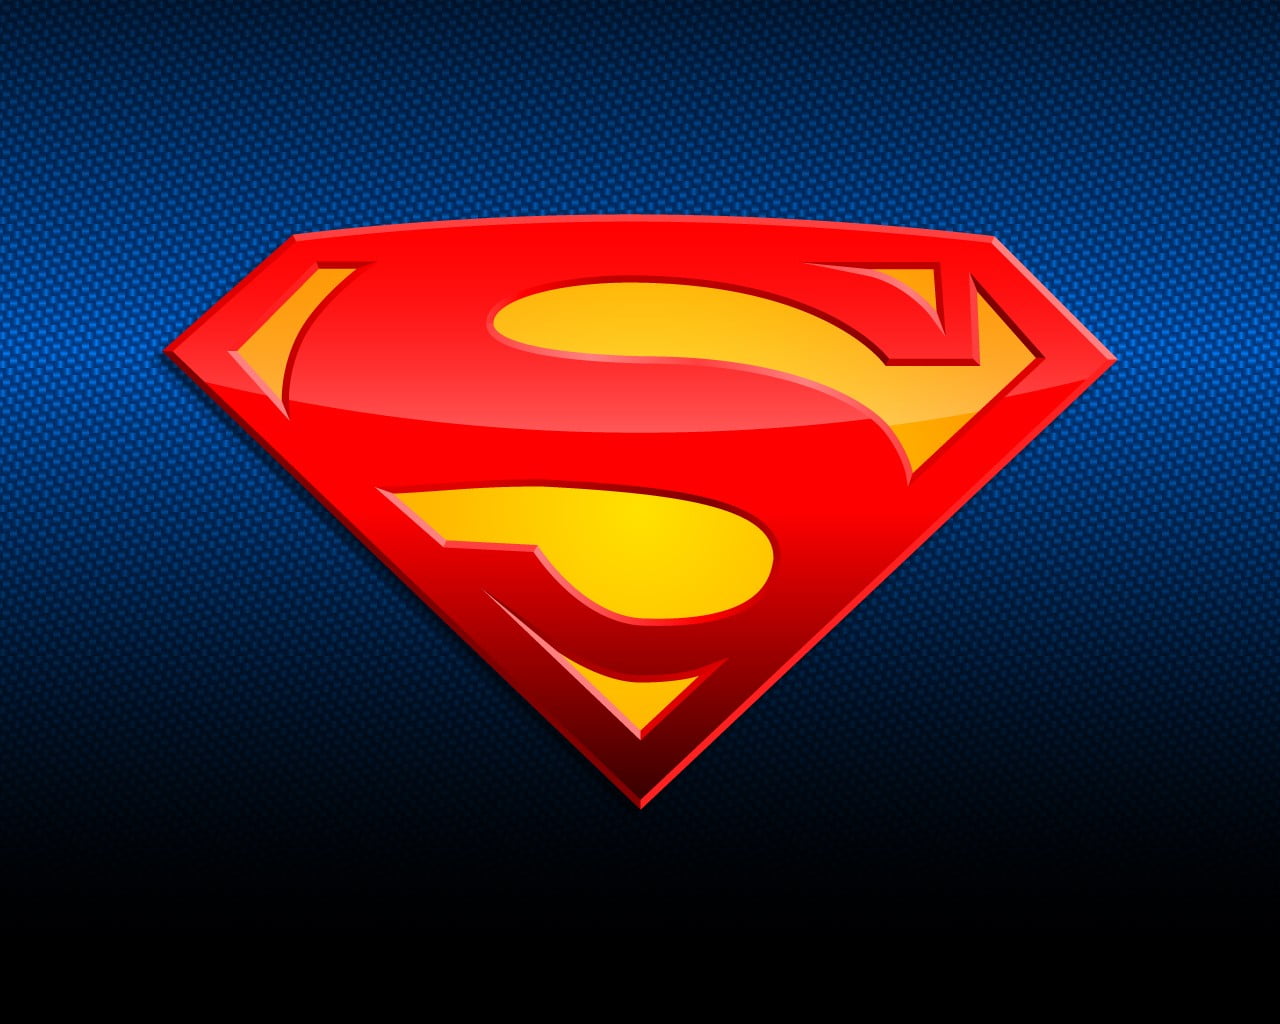 Superman logo, communication, sign, red, no people, blue, symbol